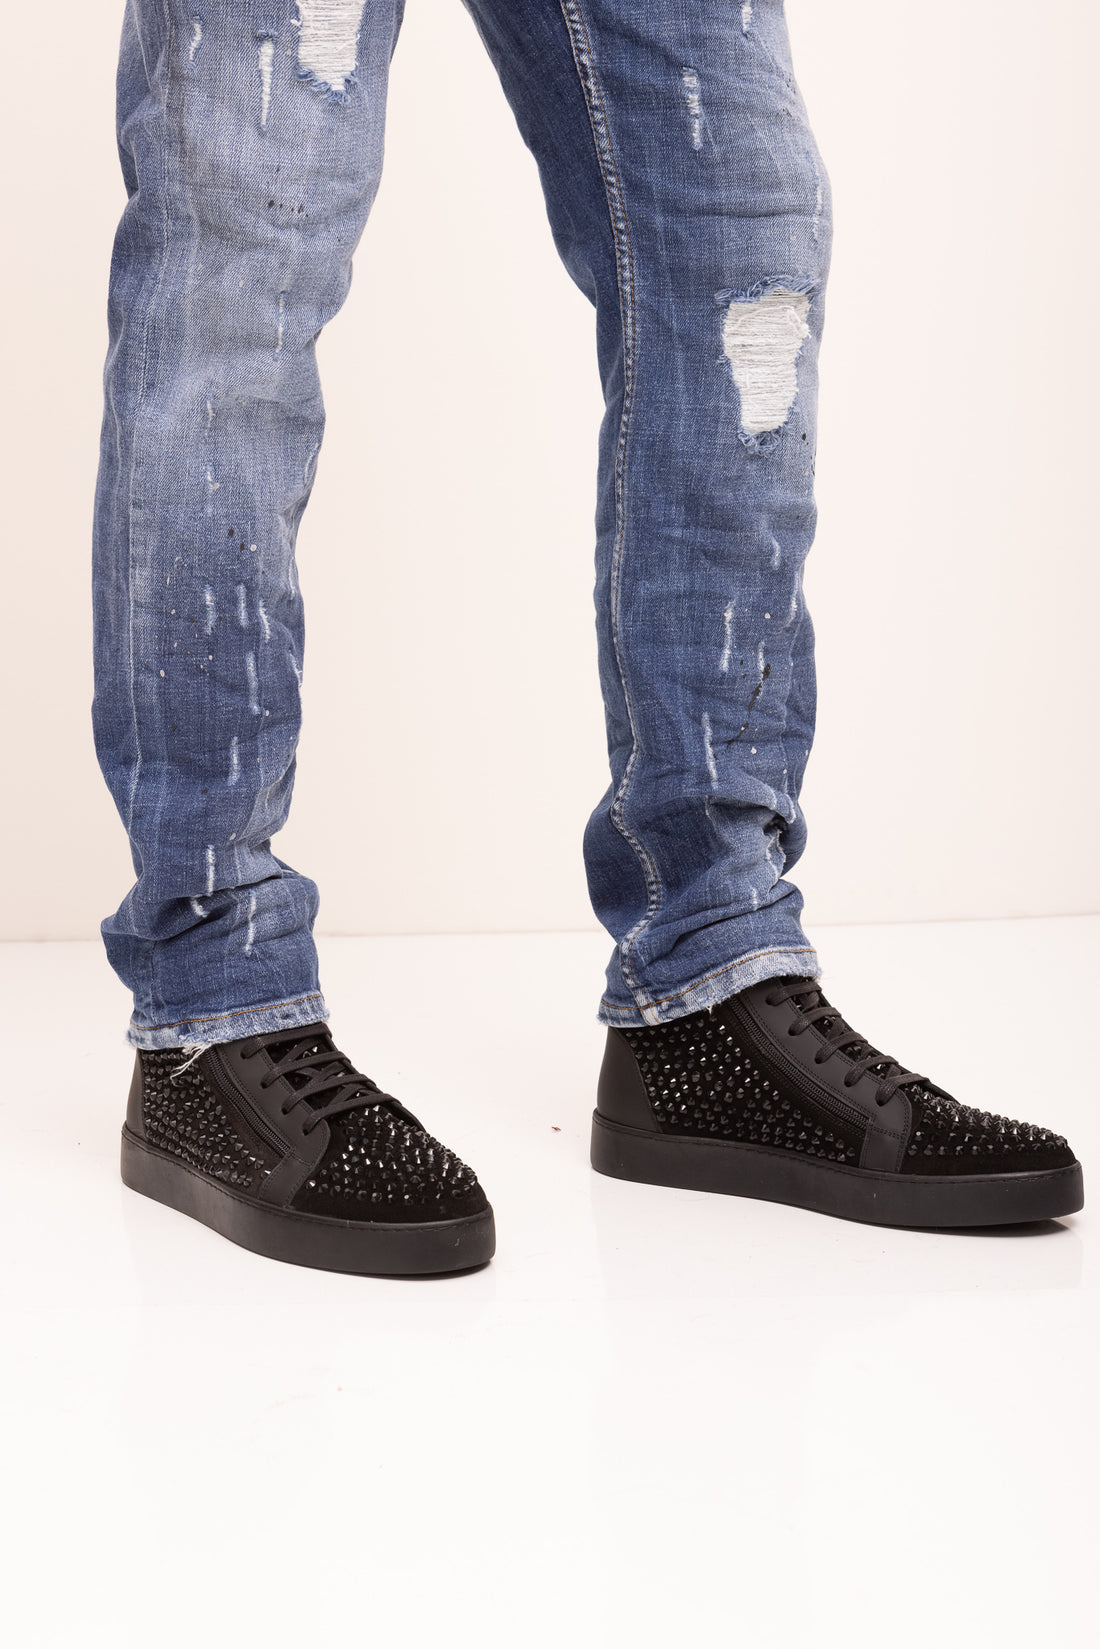 N° D2192X Crystal Studded Hi-Top Sneaker - Black Black / EU 39 US 6.5